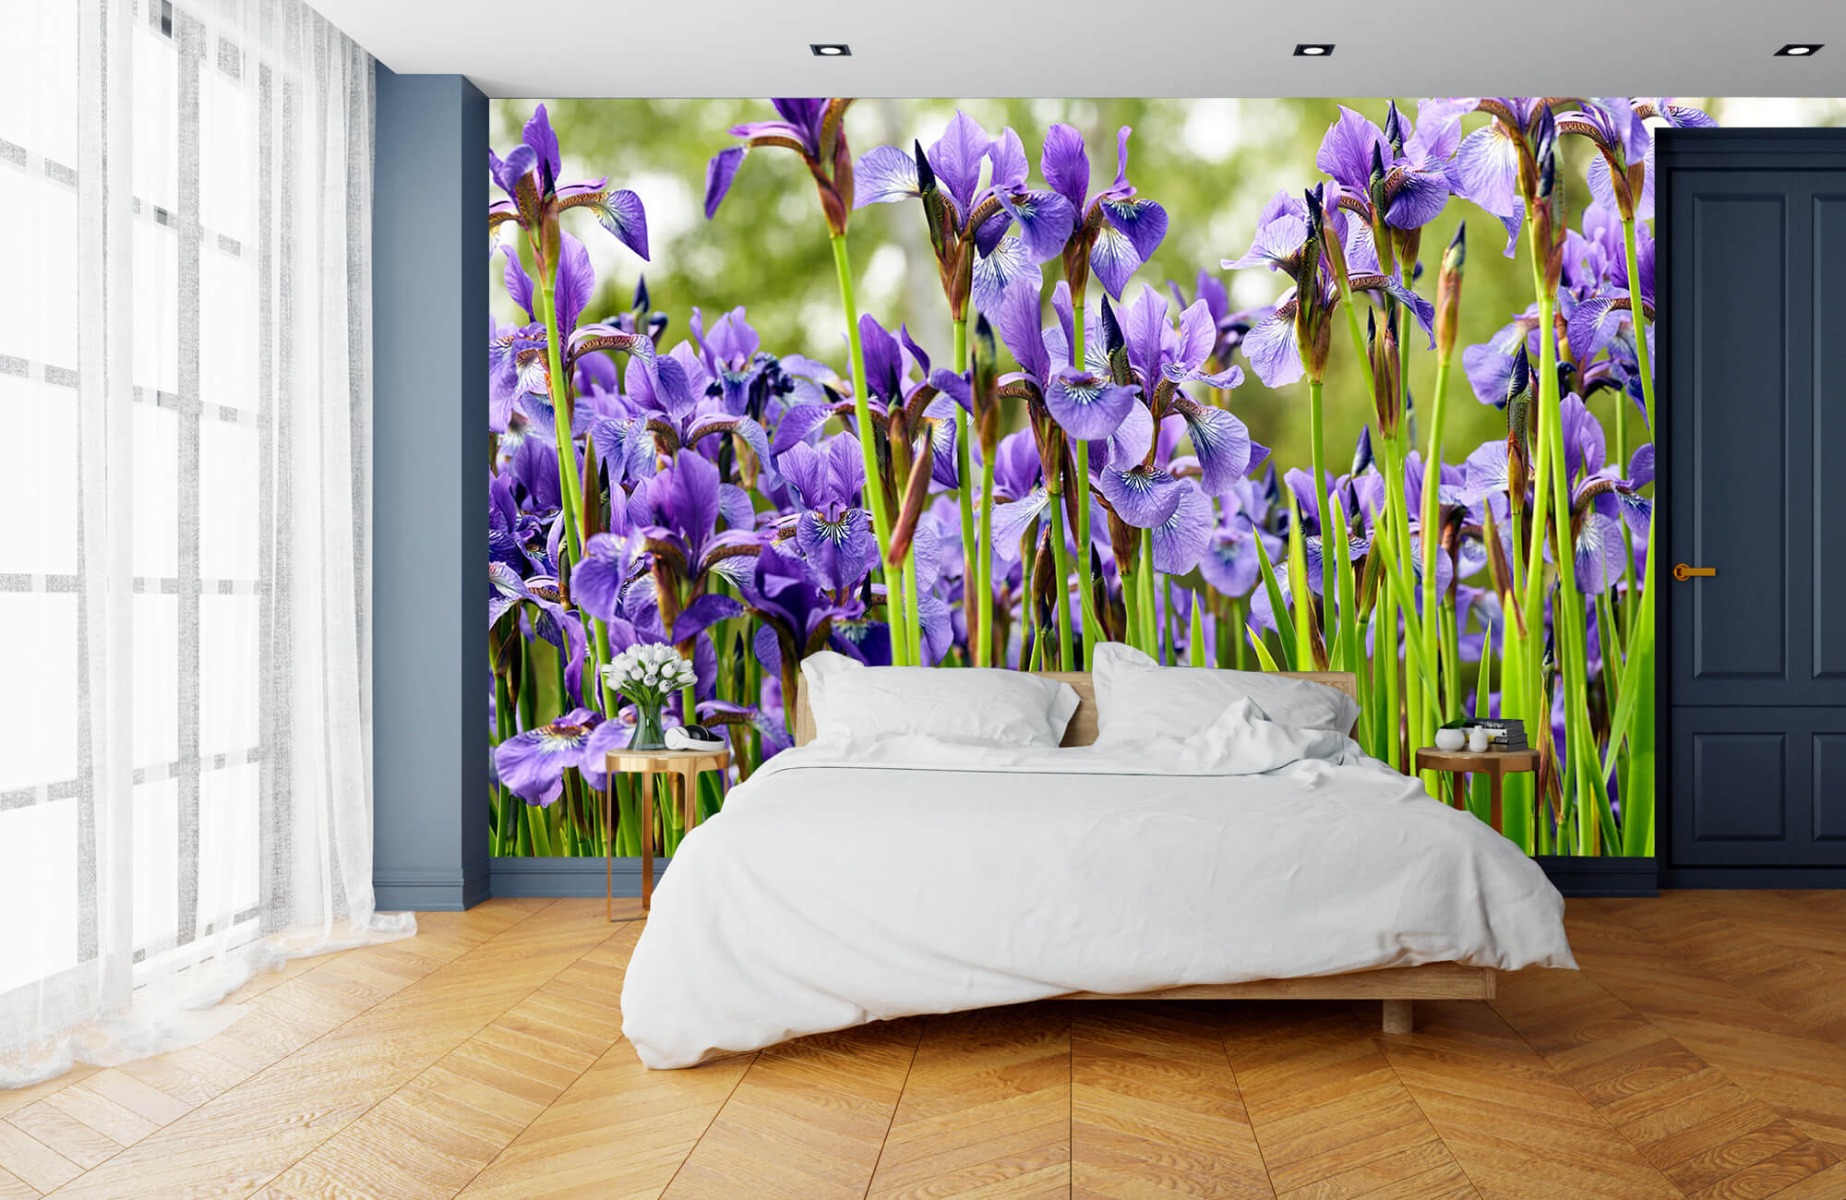 Flower fields - Irises  - Bedroom 16